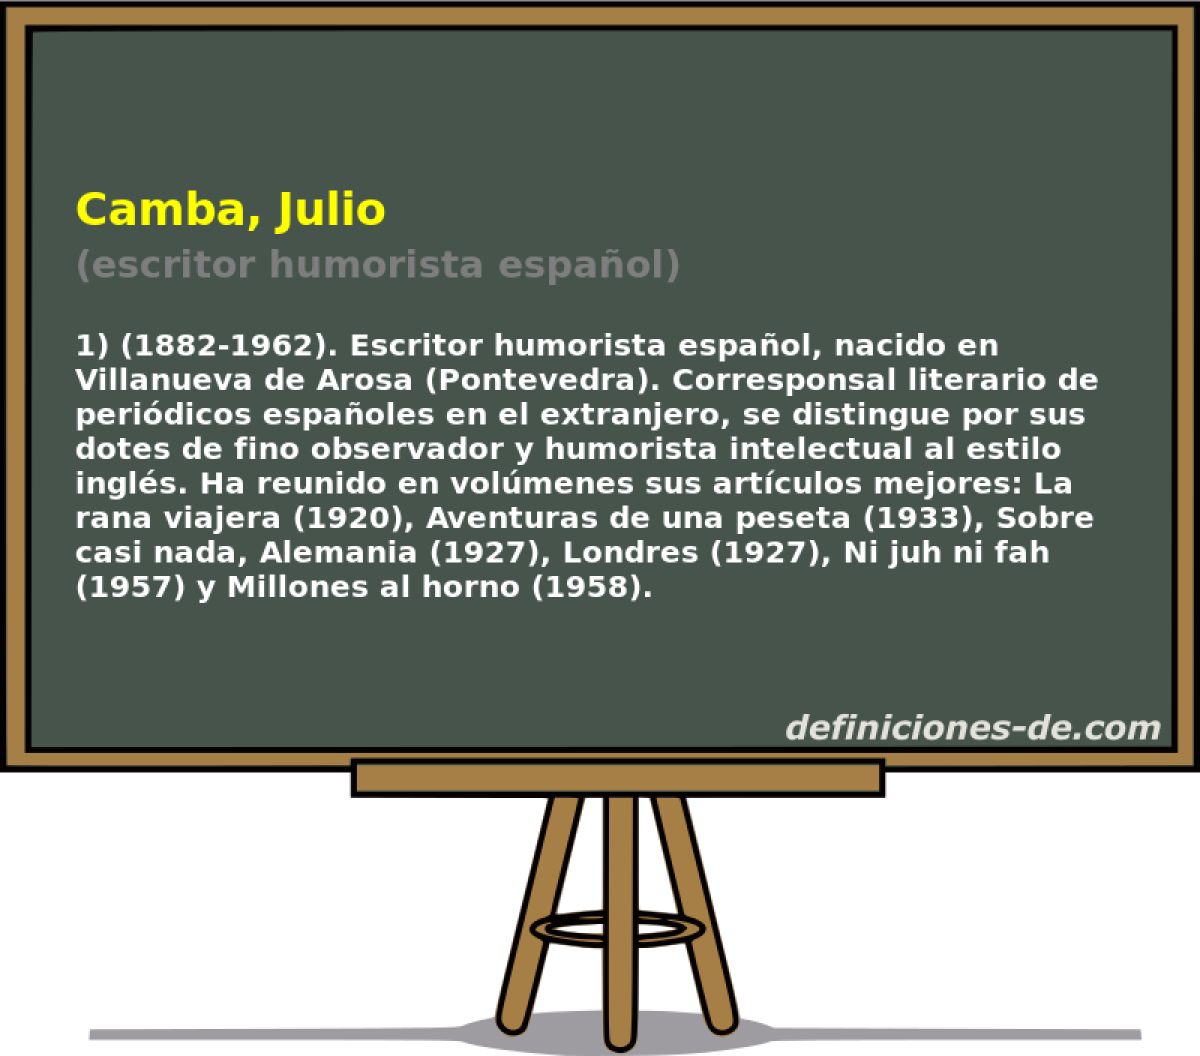 Camba, Julio (escritor humorista espaol)